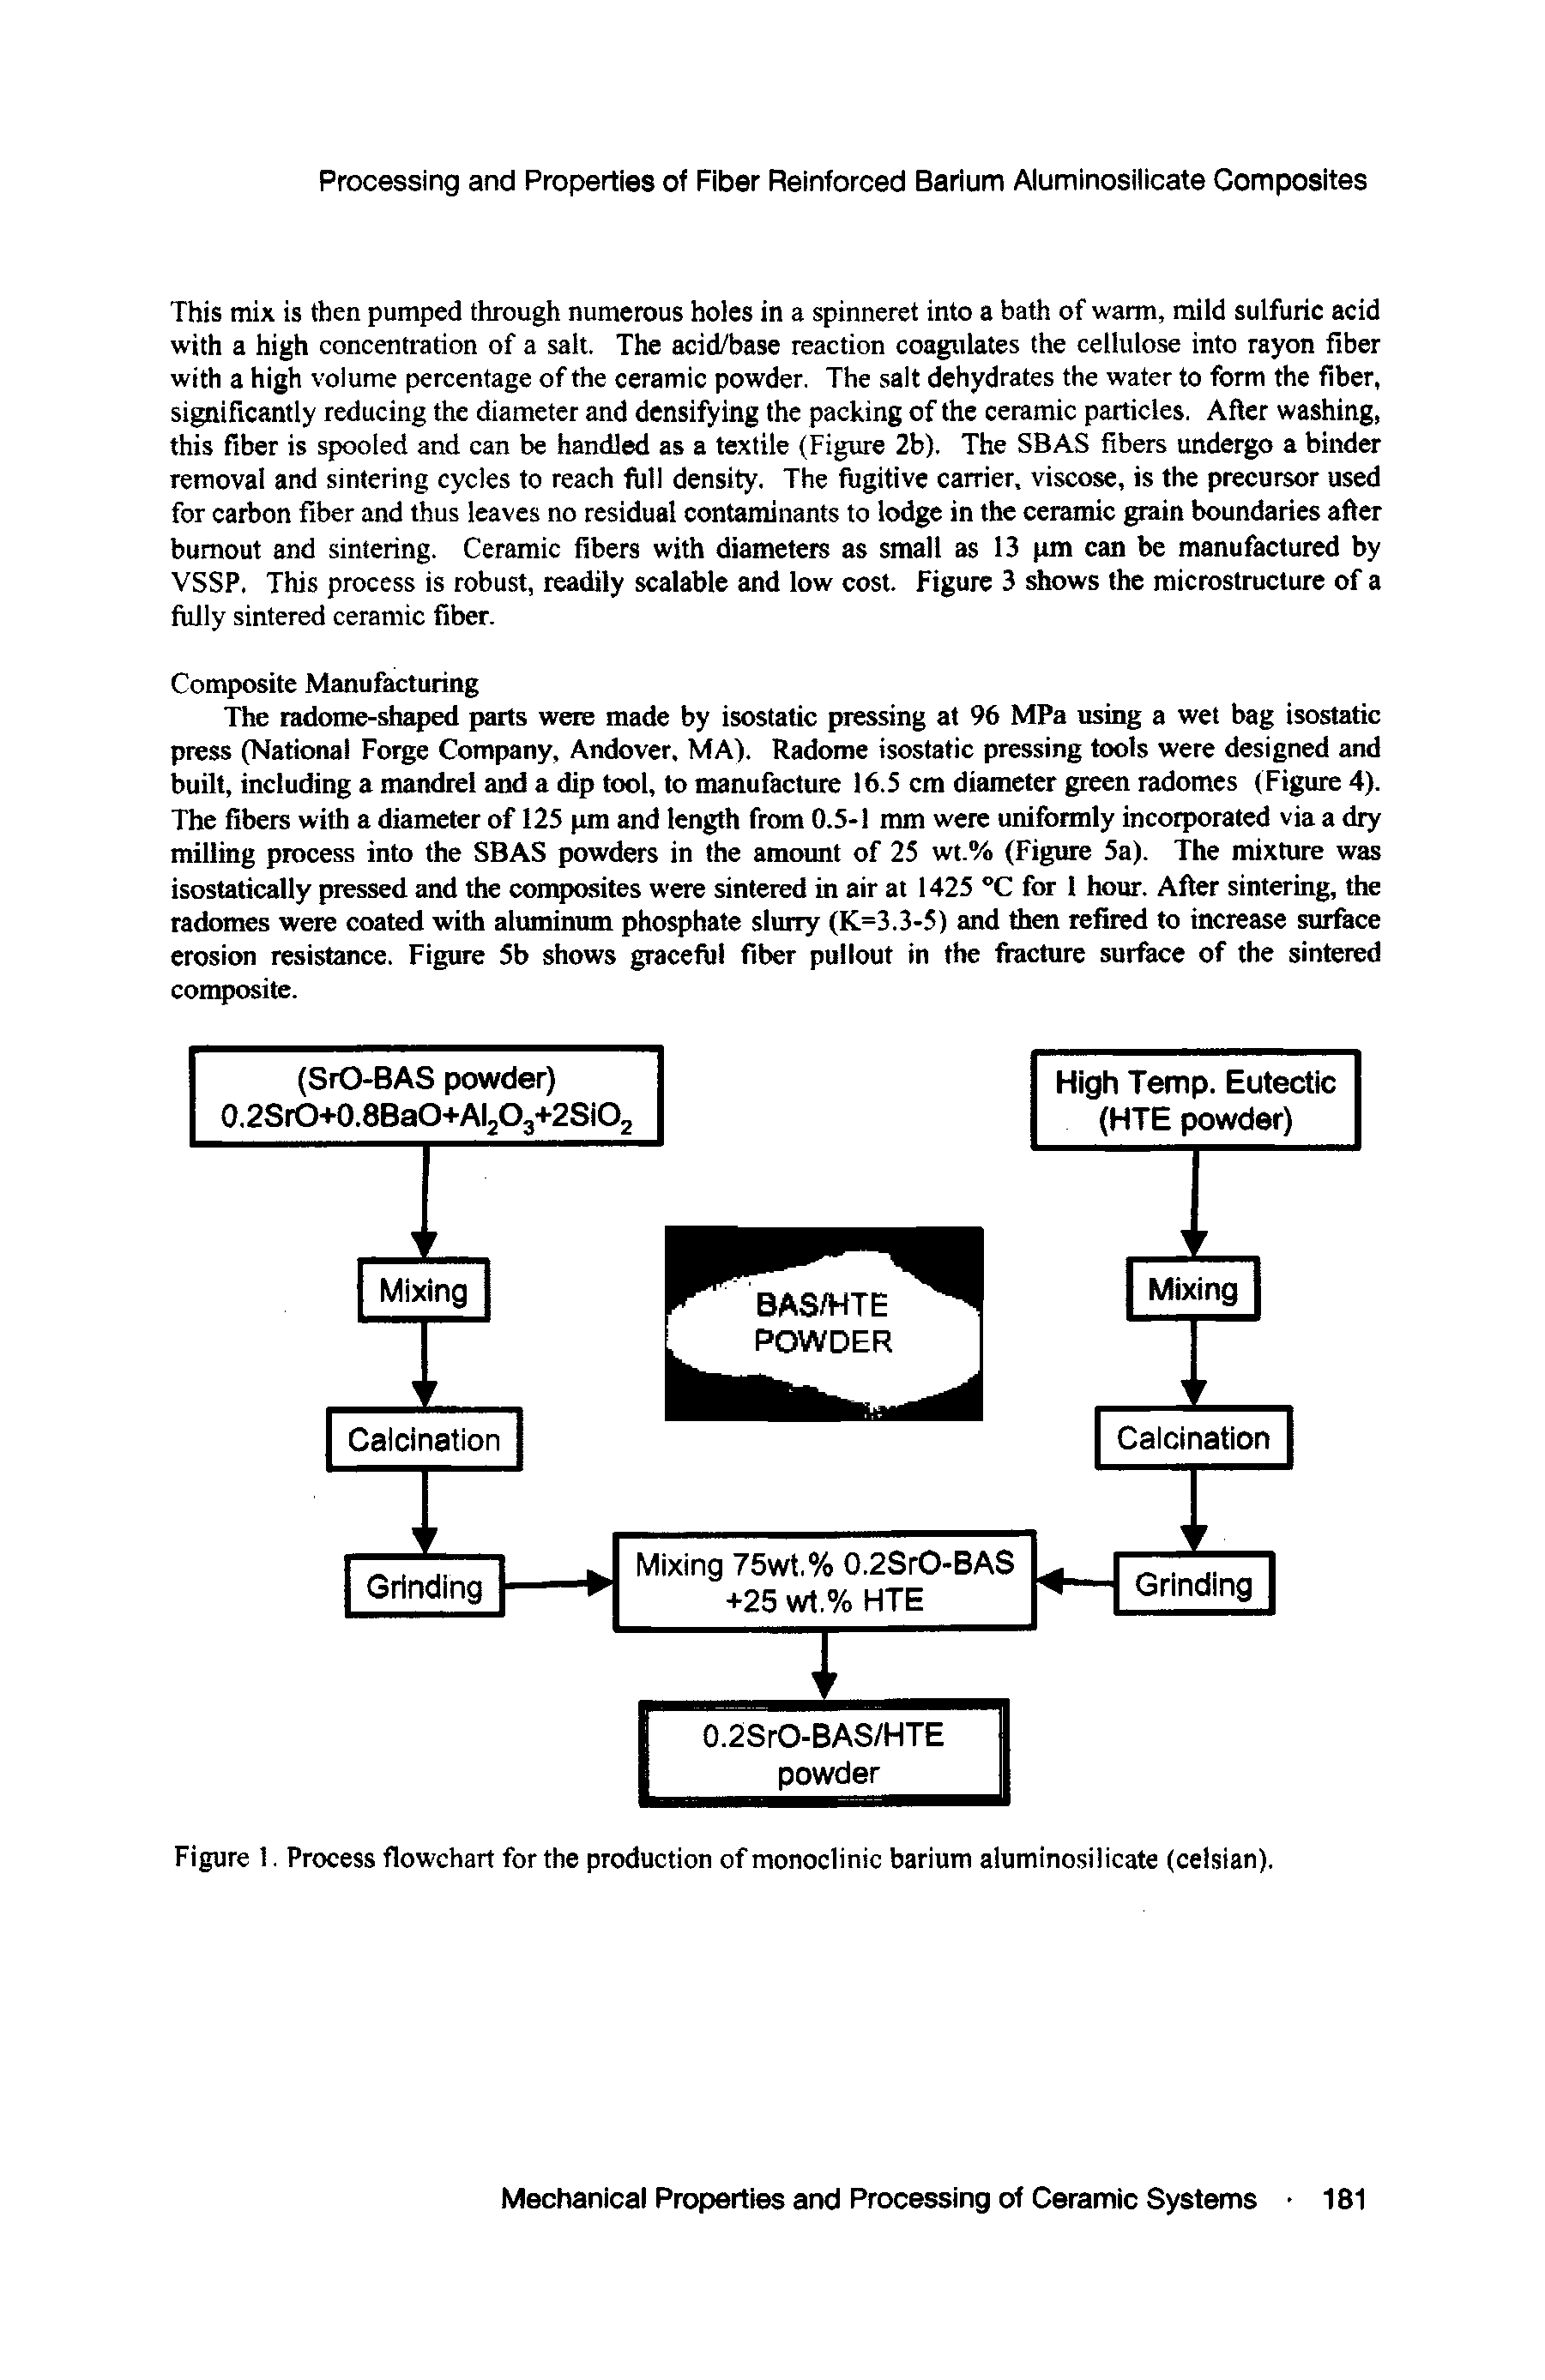 Figure 1. Process flowchart for the production of monoclinic barium aluminosilicate (celsian).